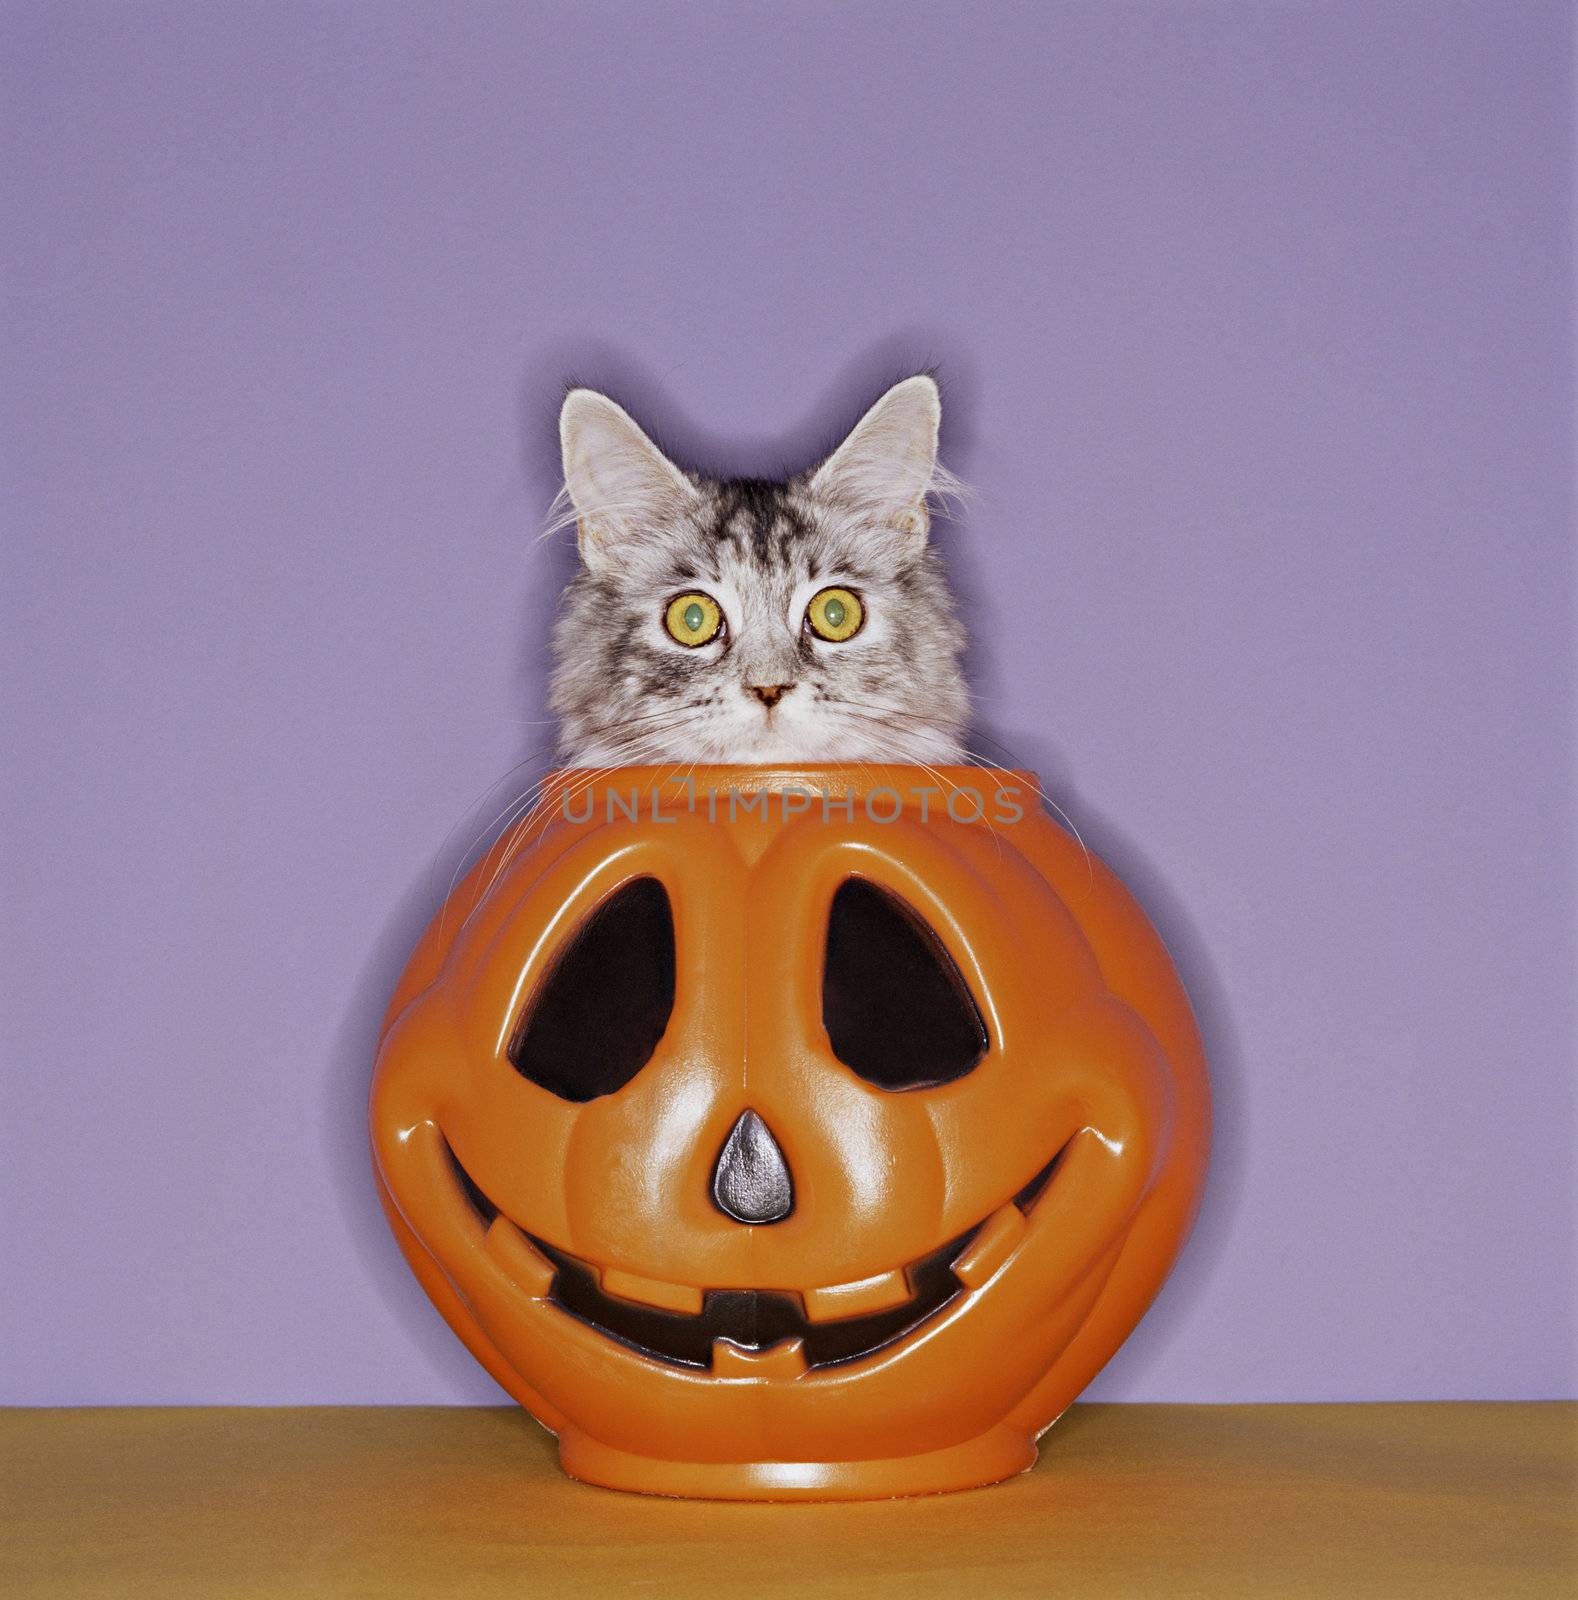 Startled Cat Peeping Out of Halloween Pumpkin by photo_guru